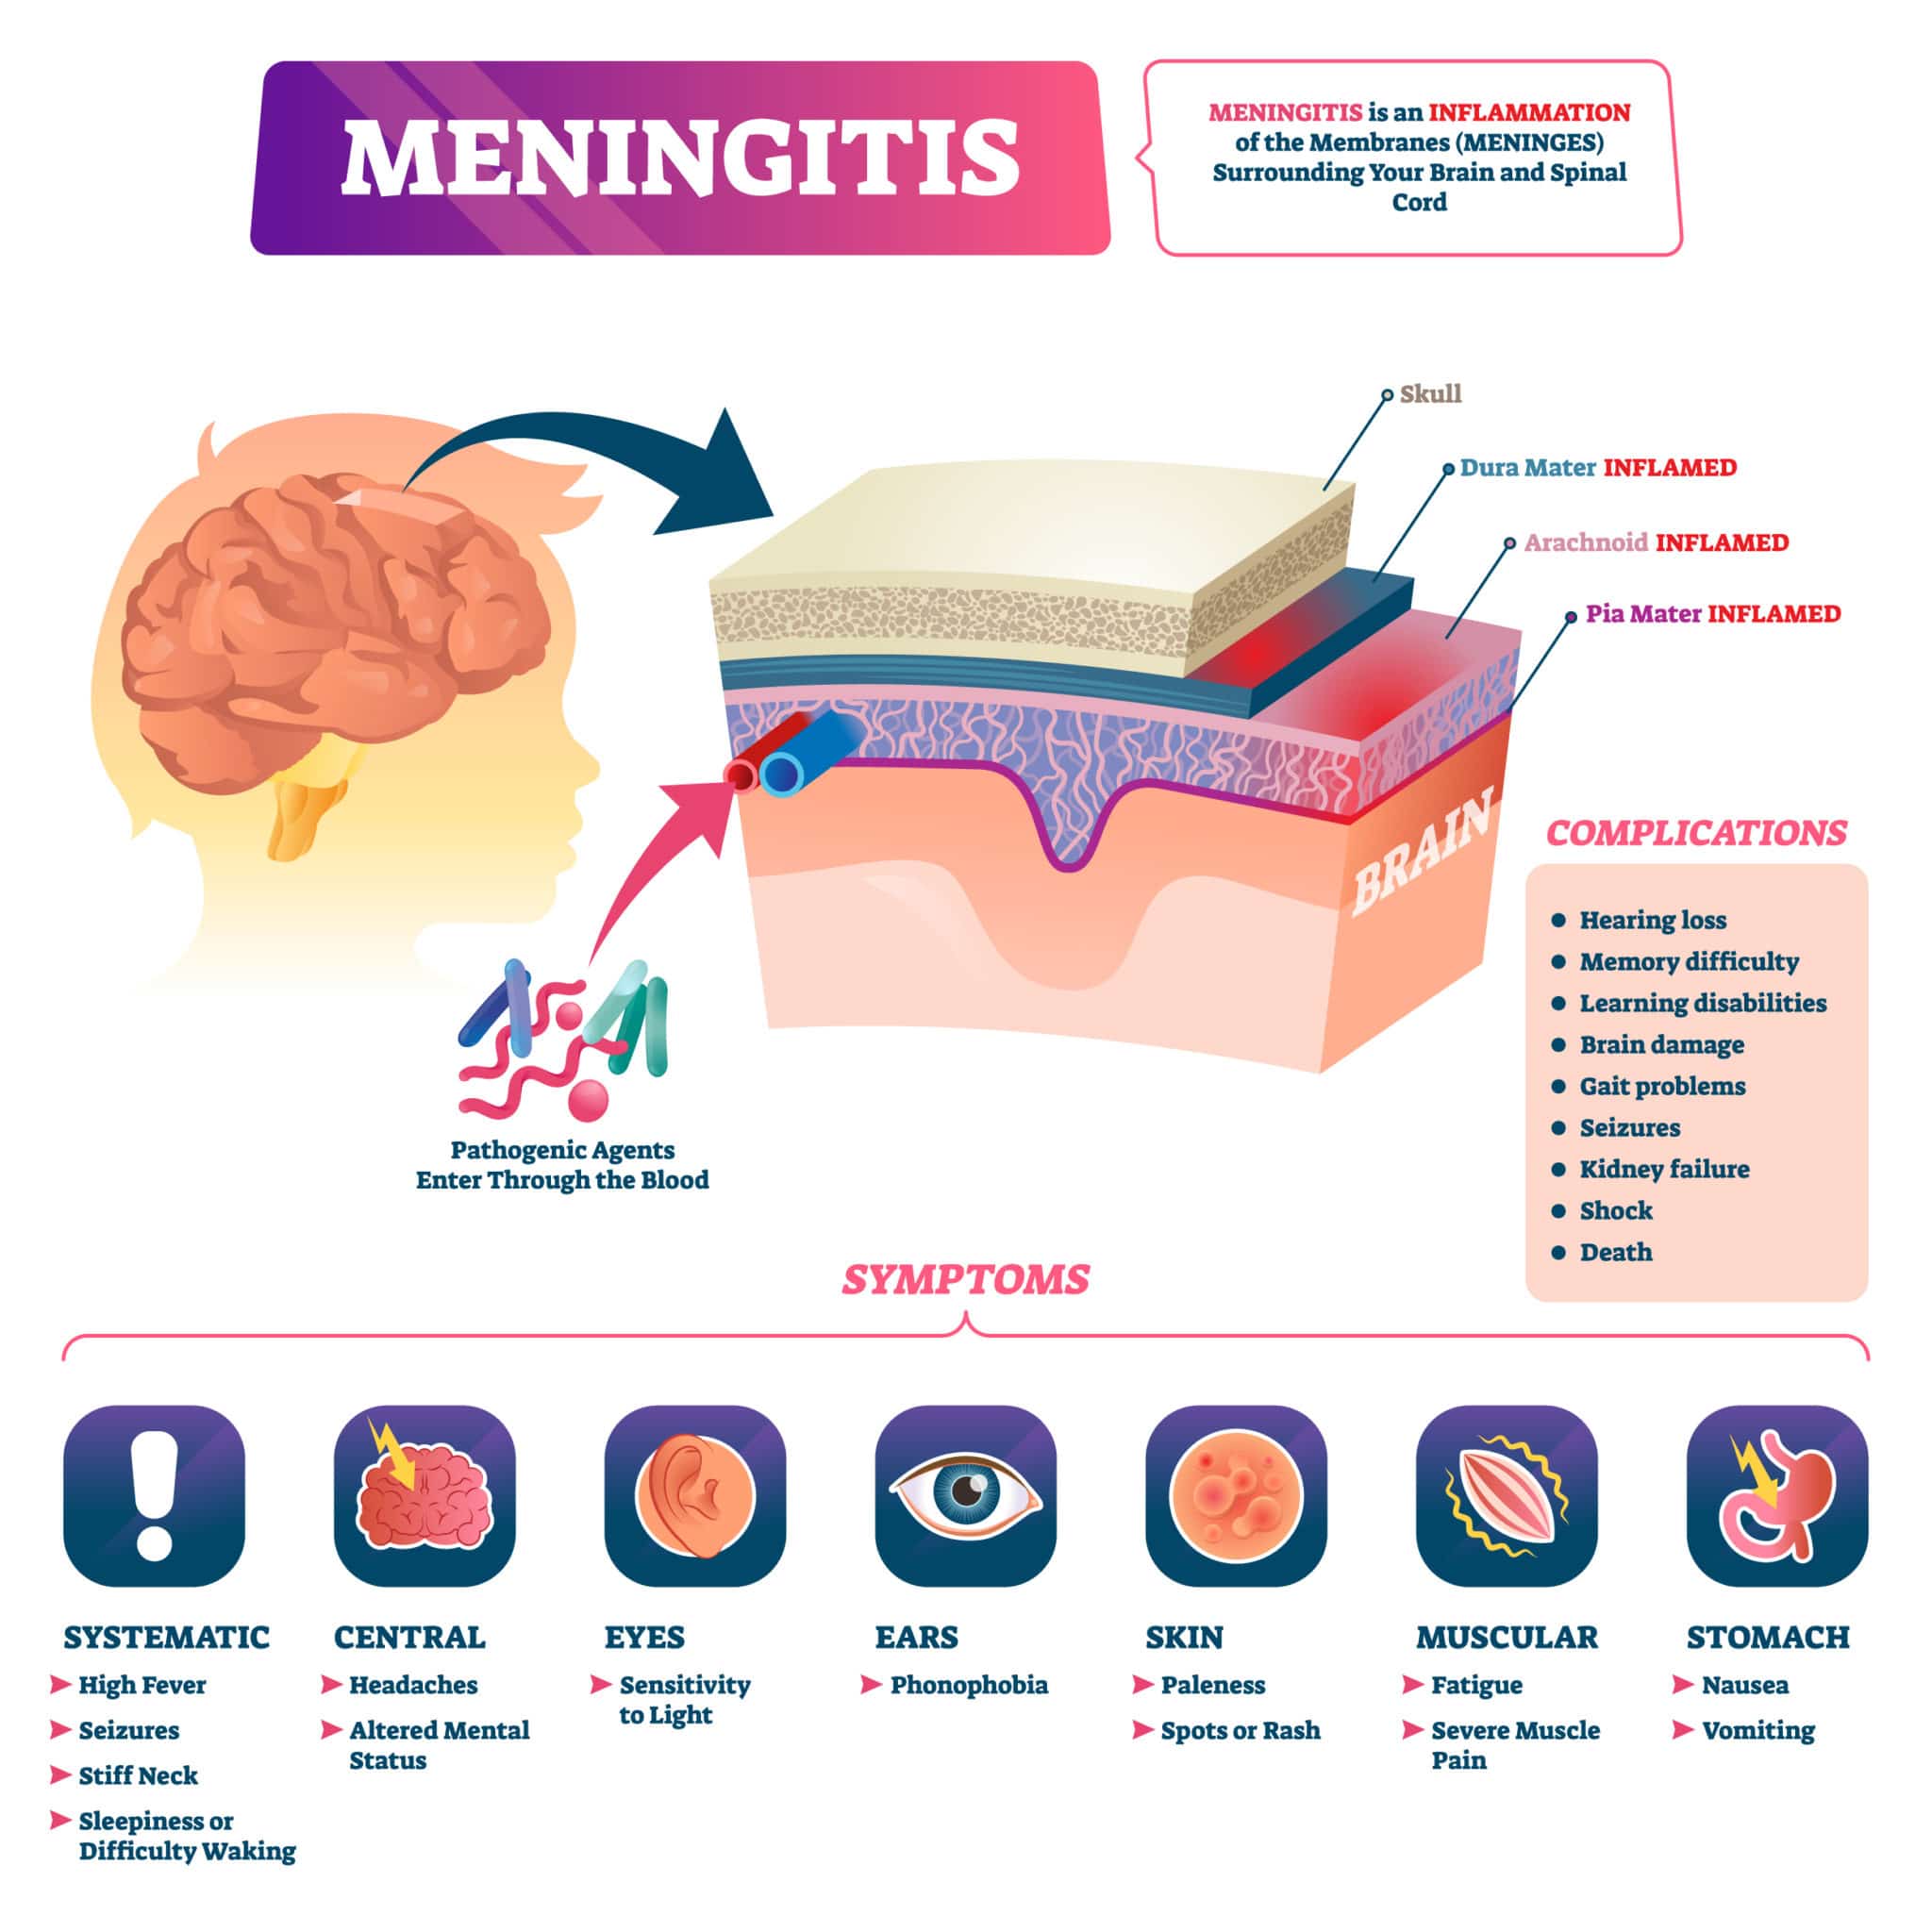 Meningitis in newborns: Long term effects, survival rate, and more